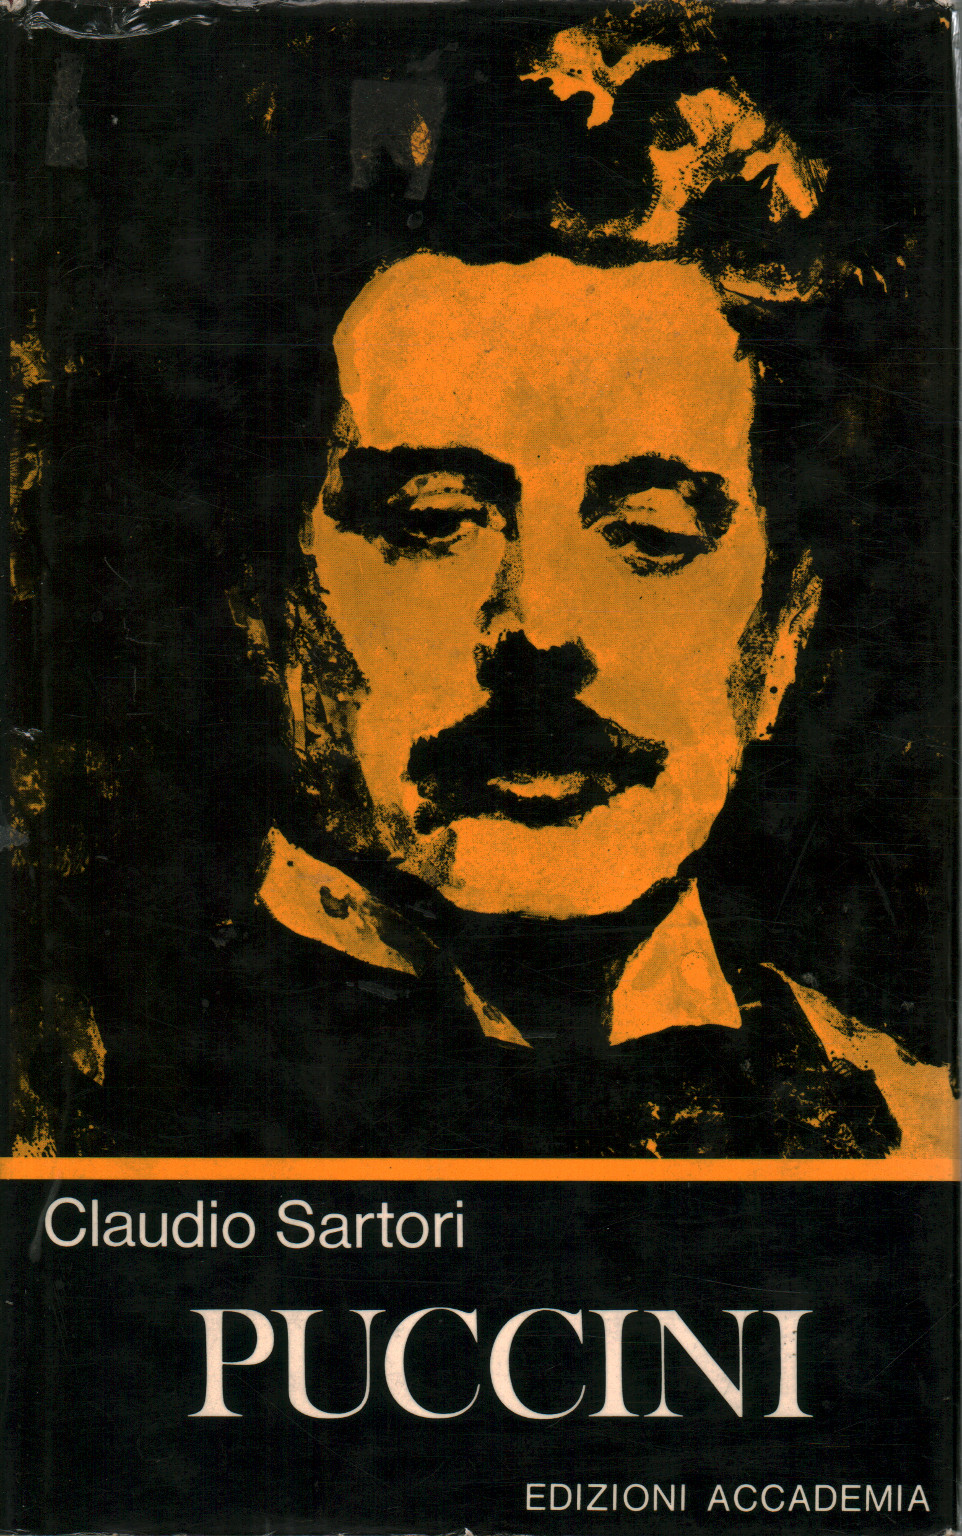 Puccini, Claudio Sartori